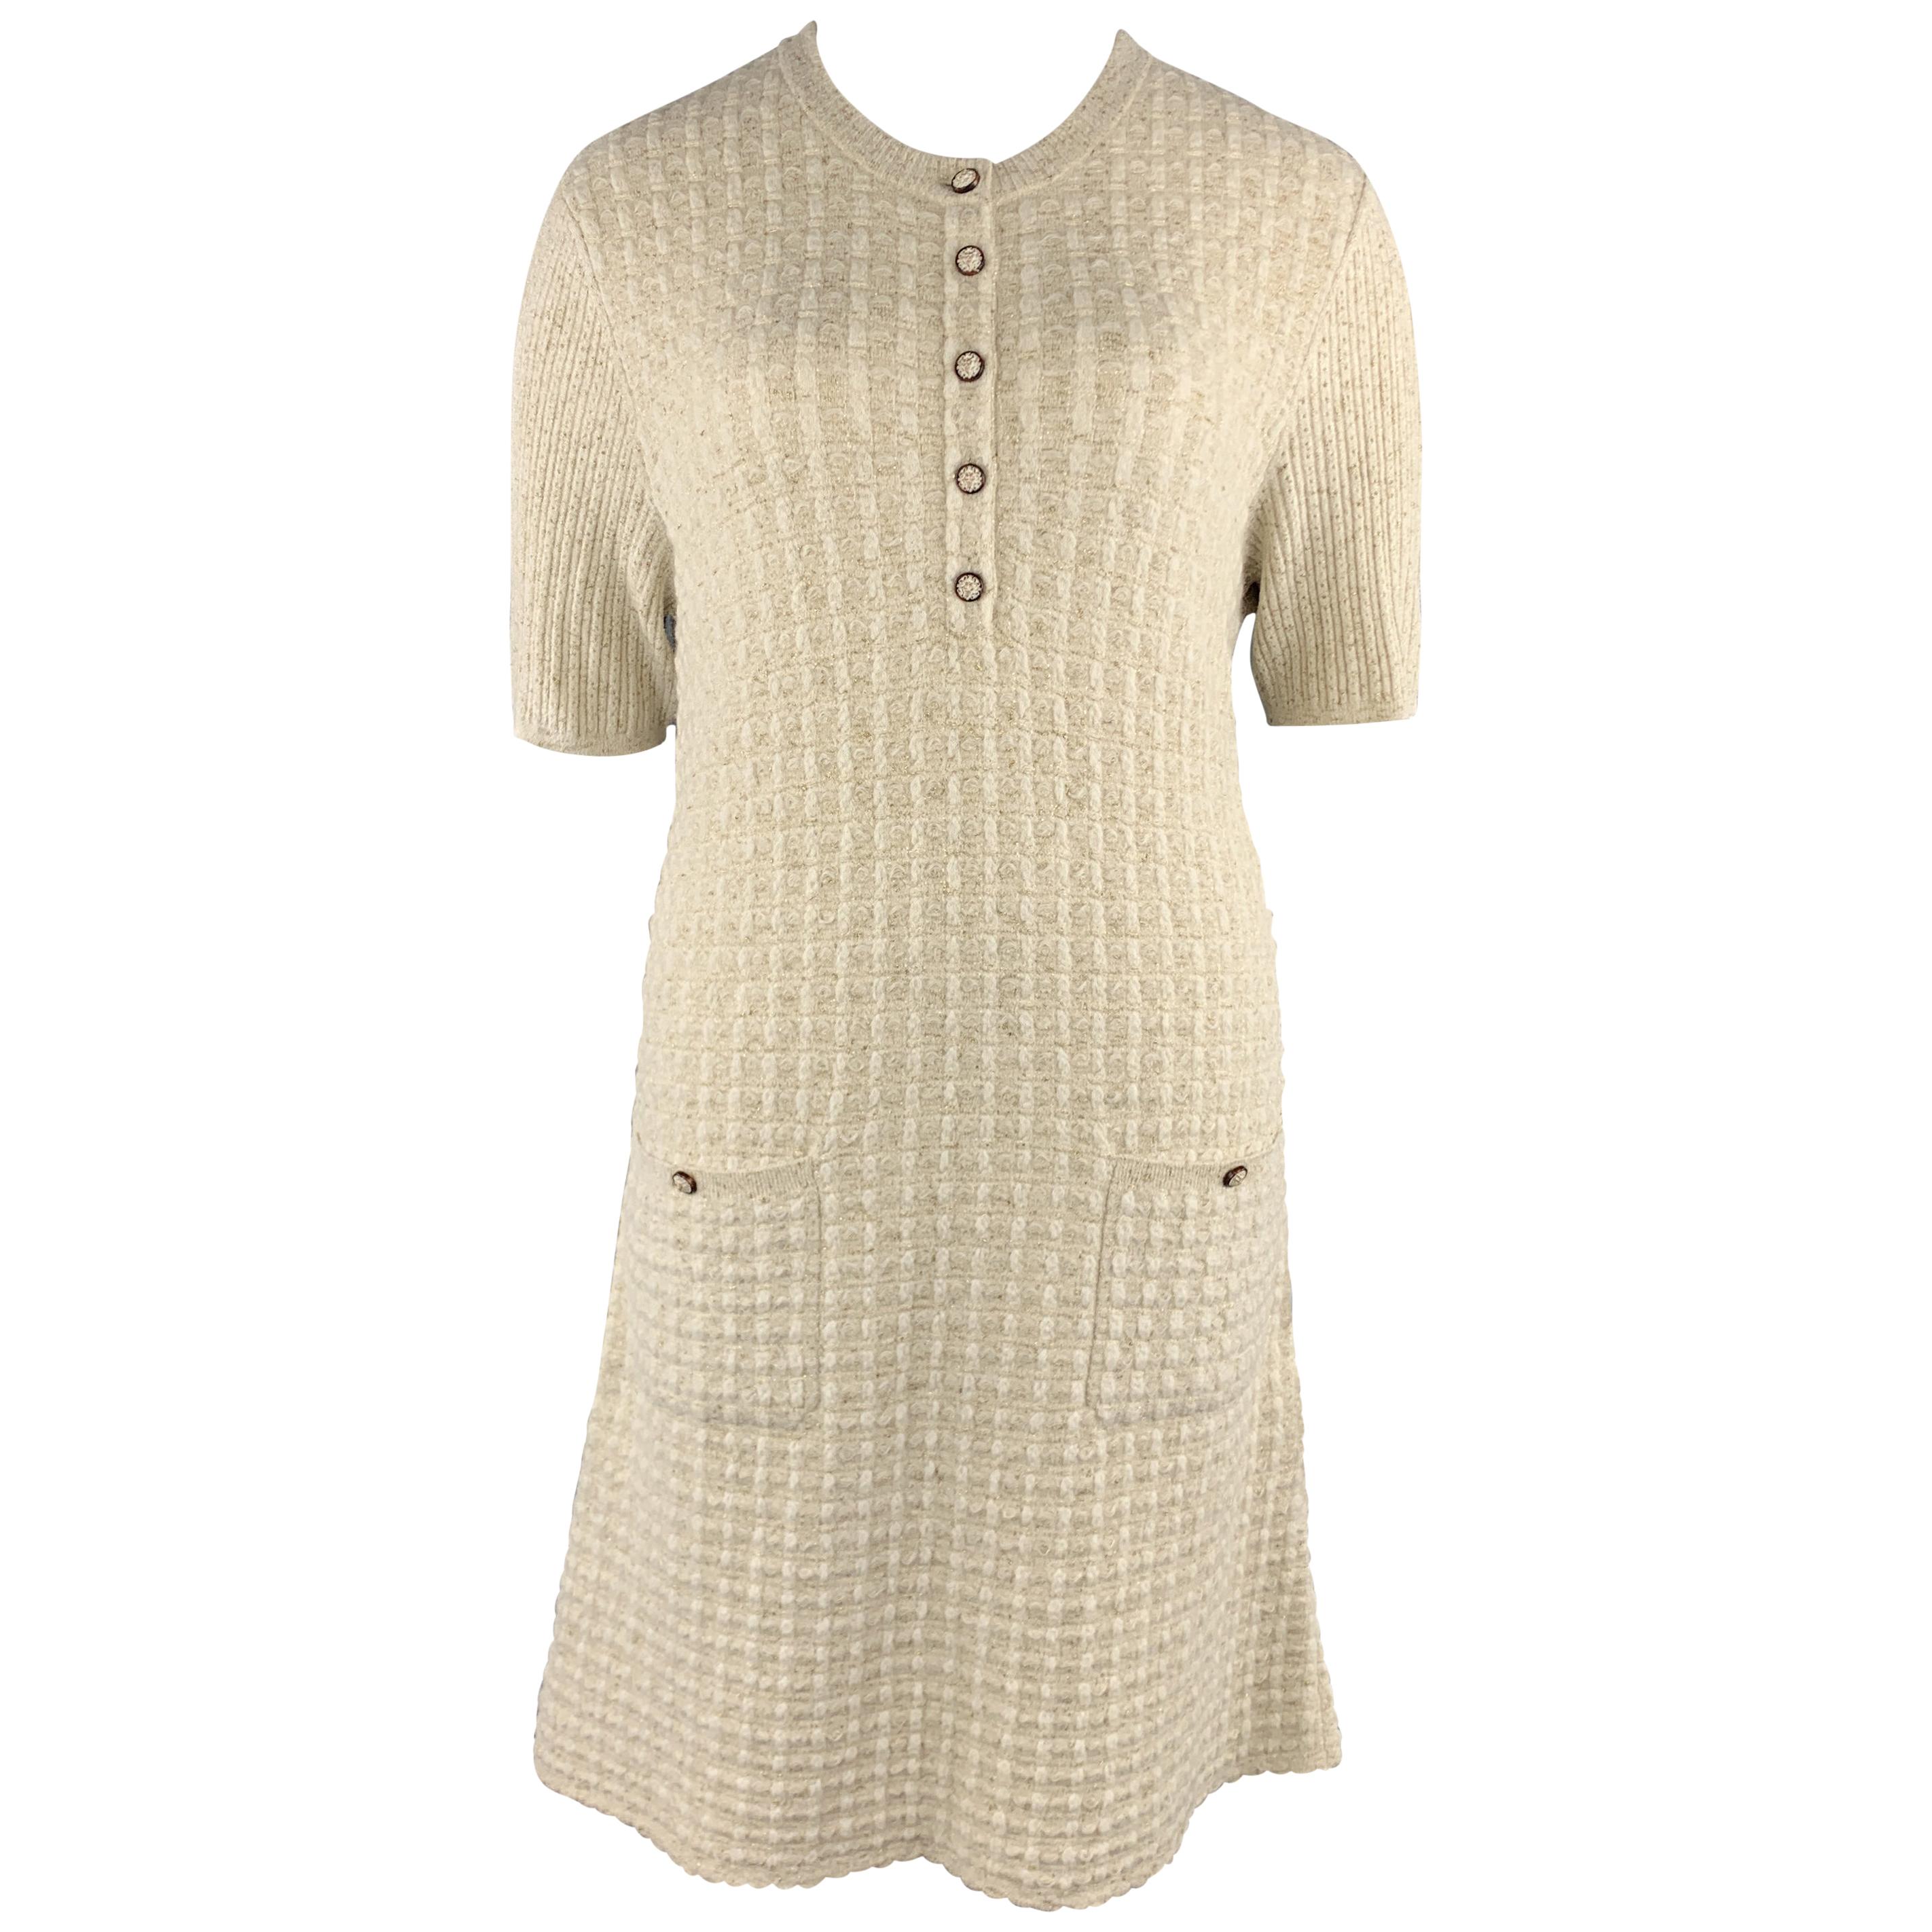 CHANEL Size 10 Cream & Gold Metallic Sparkle Knit Short Sleeve Dress